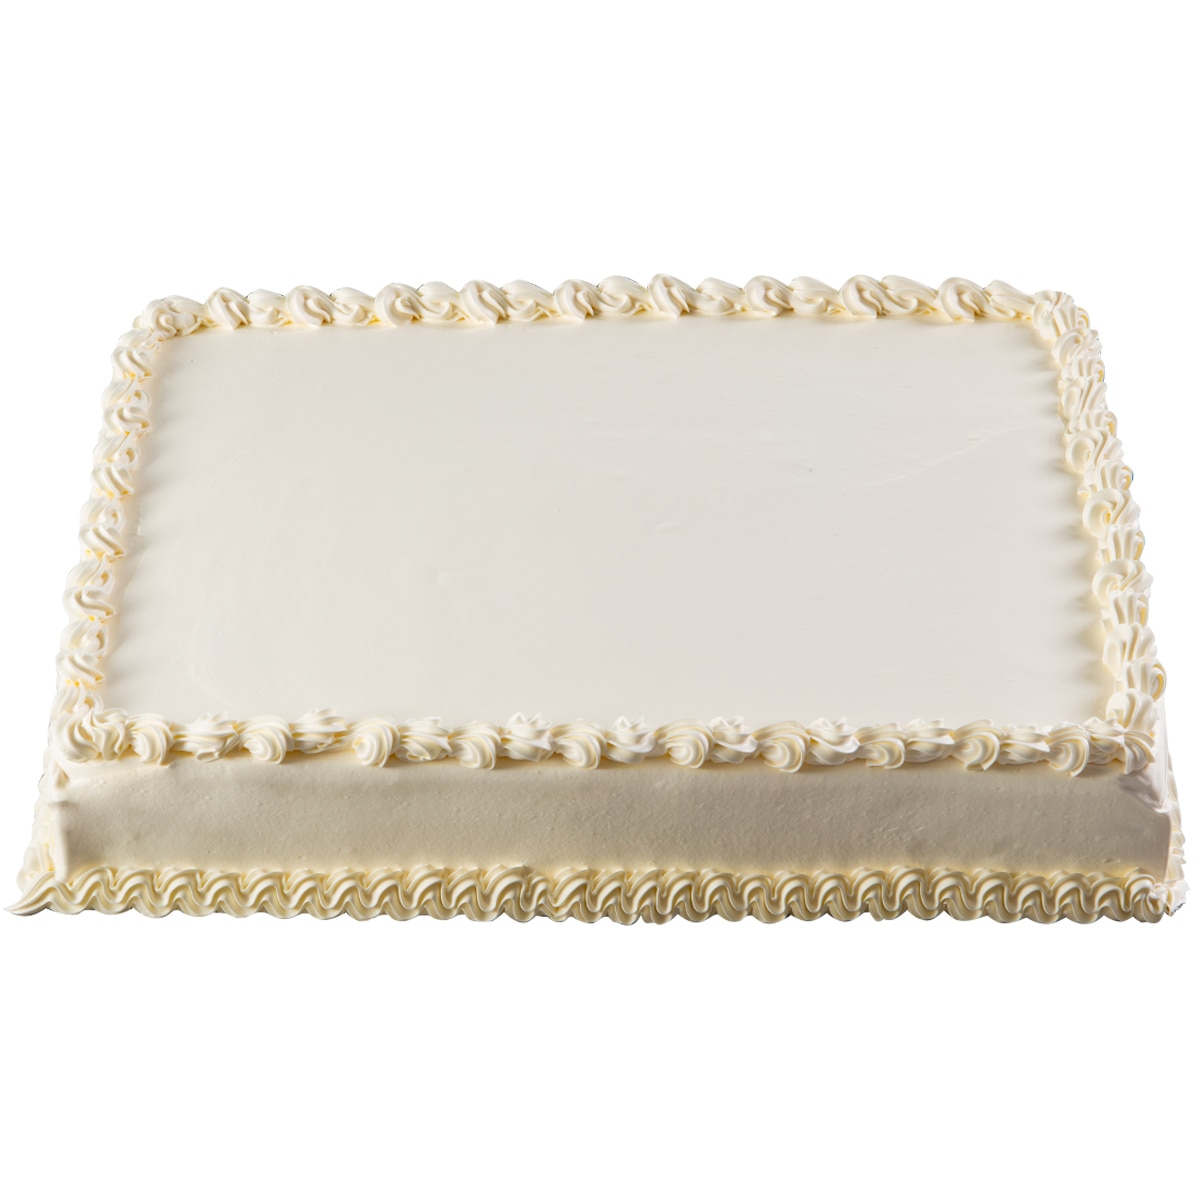 Happy Birthday - Sailboat Cake